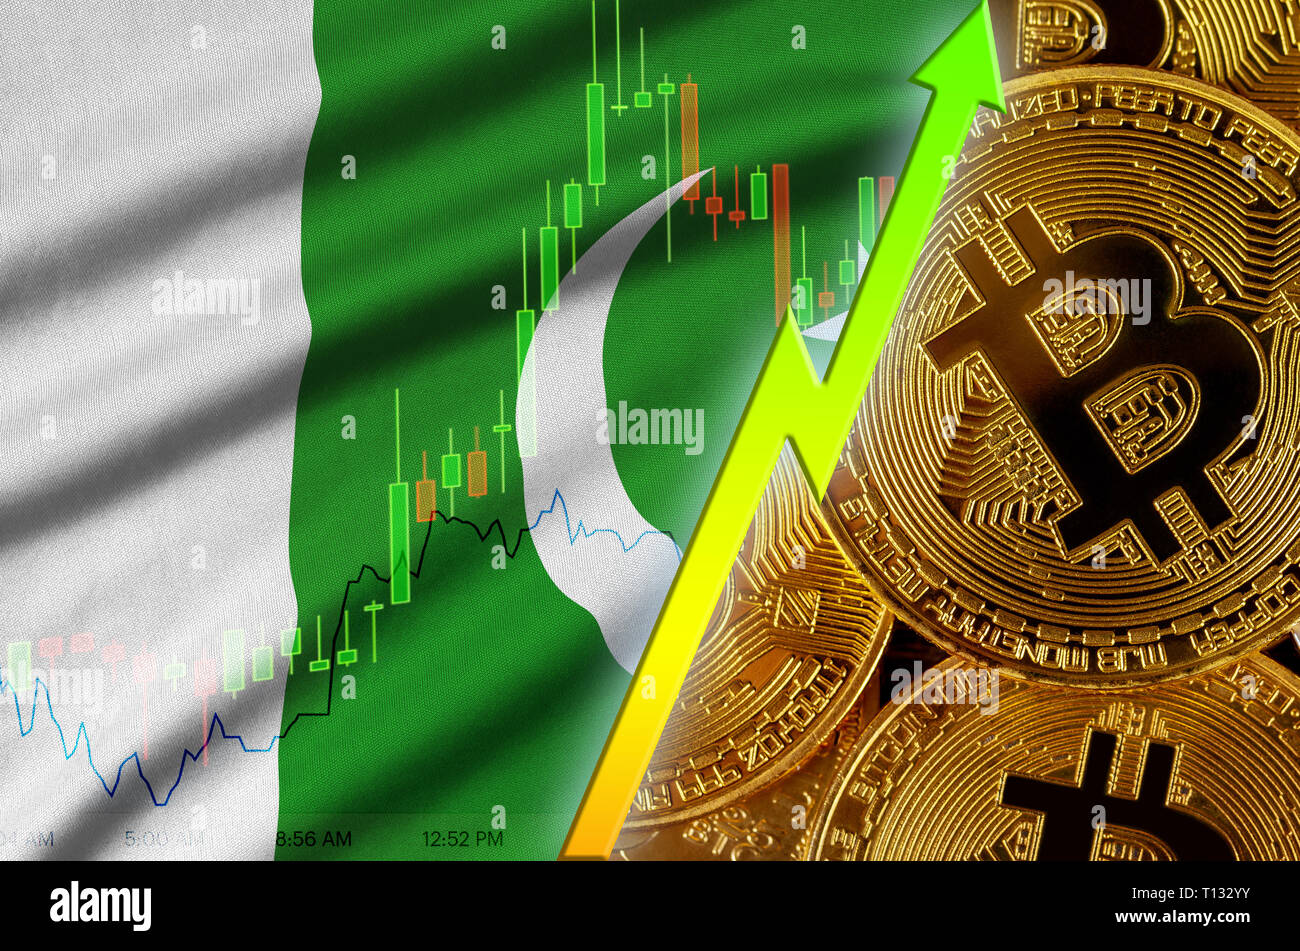 Bitcoin price in pakistan